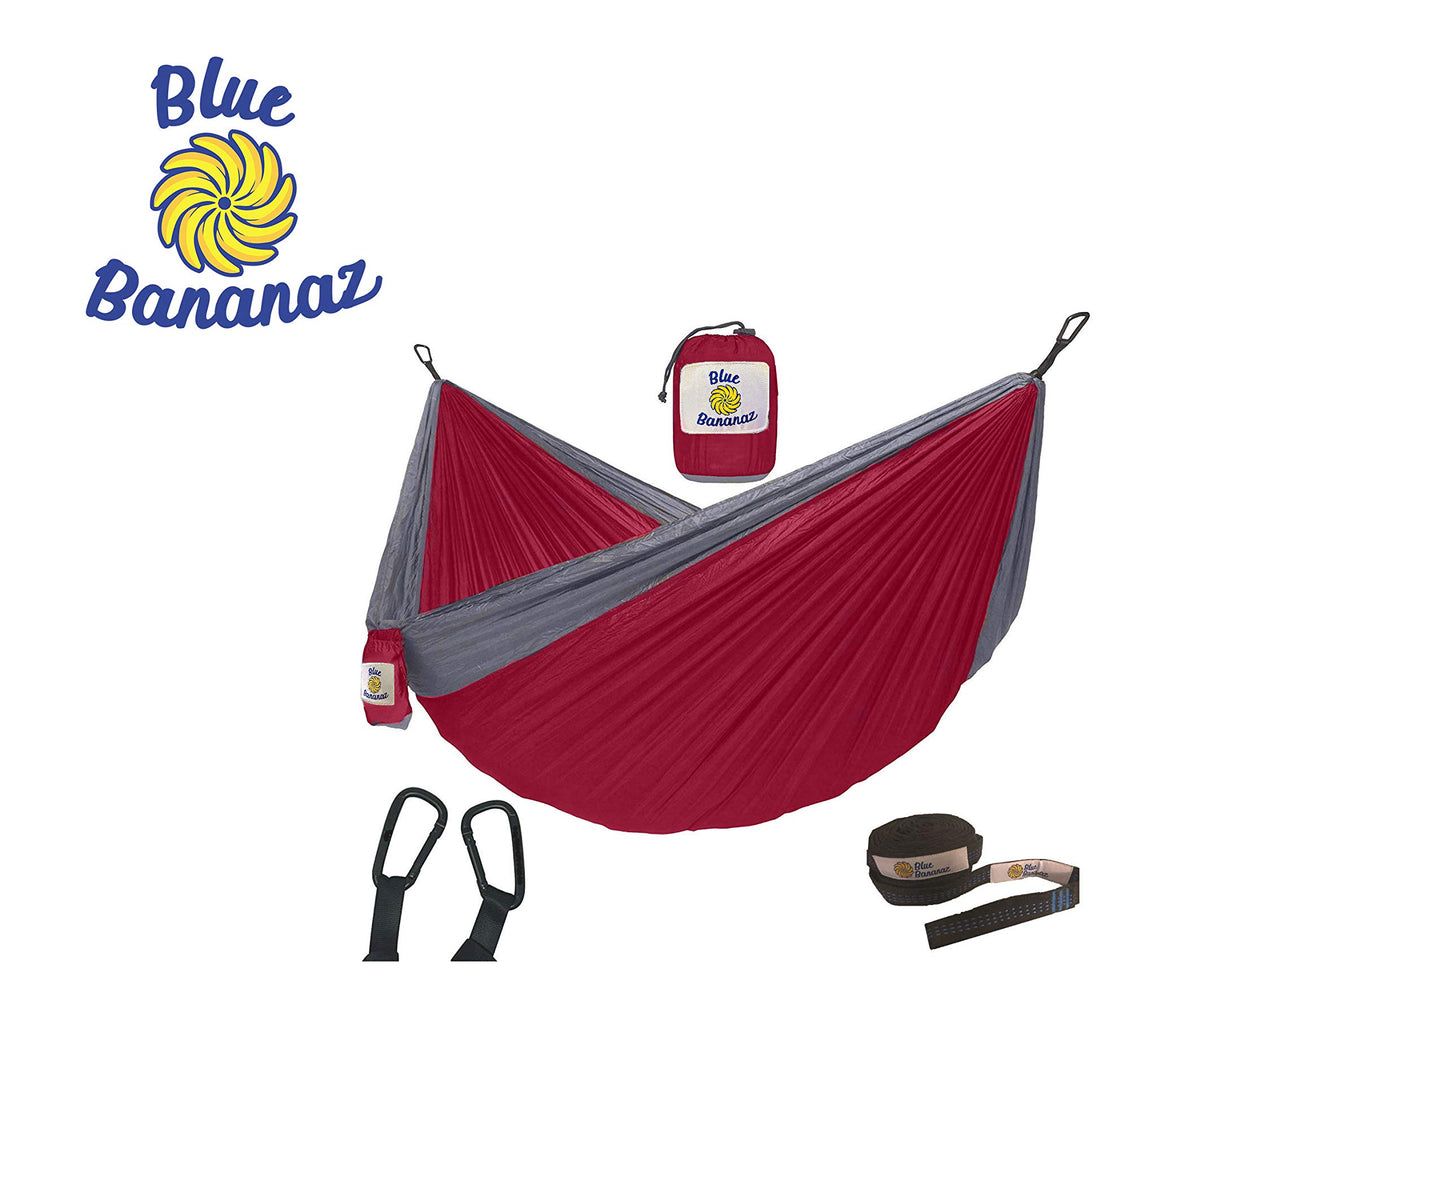 Camping Hammock for Outdoors - Blue Bananaz